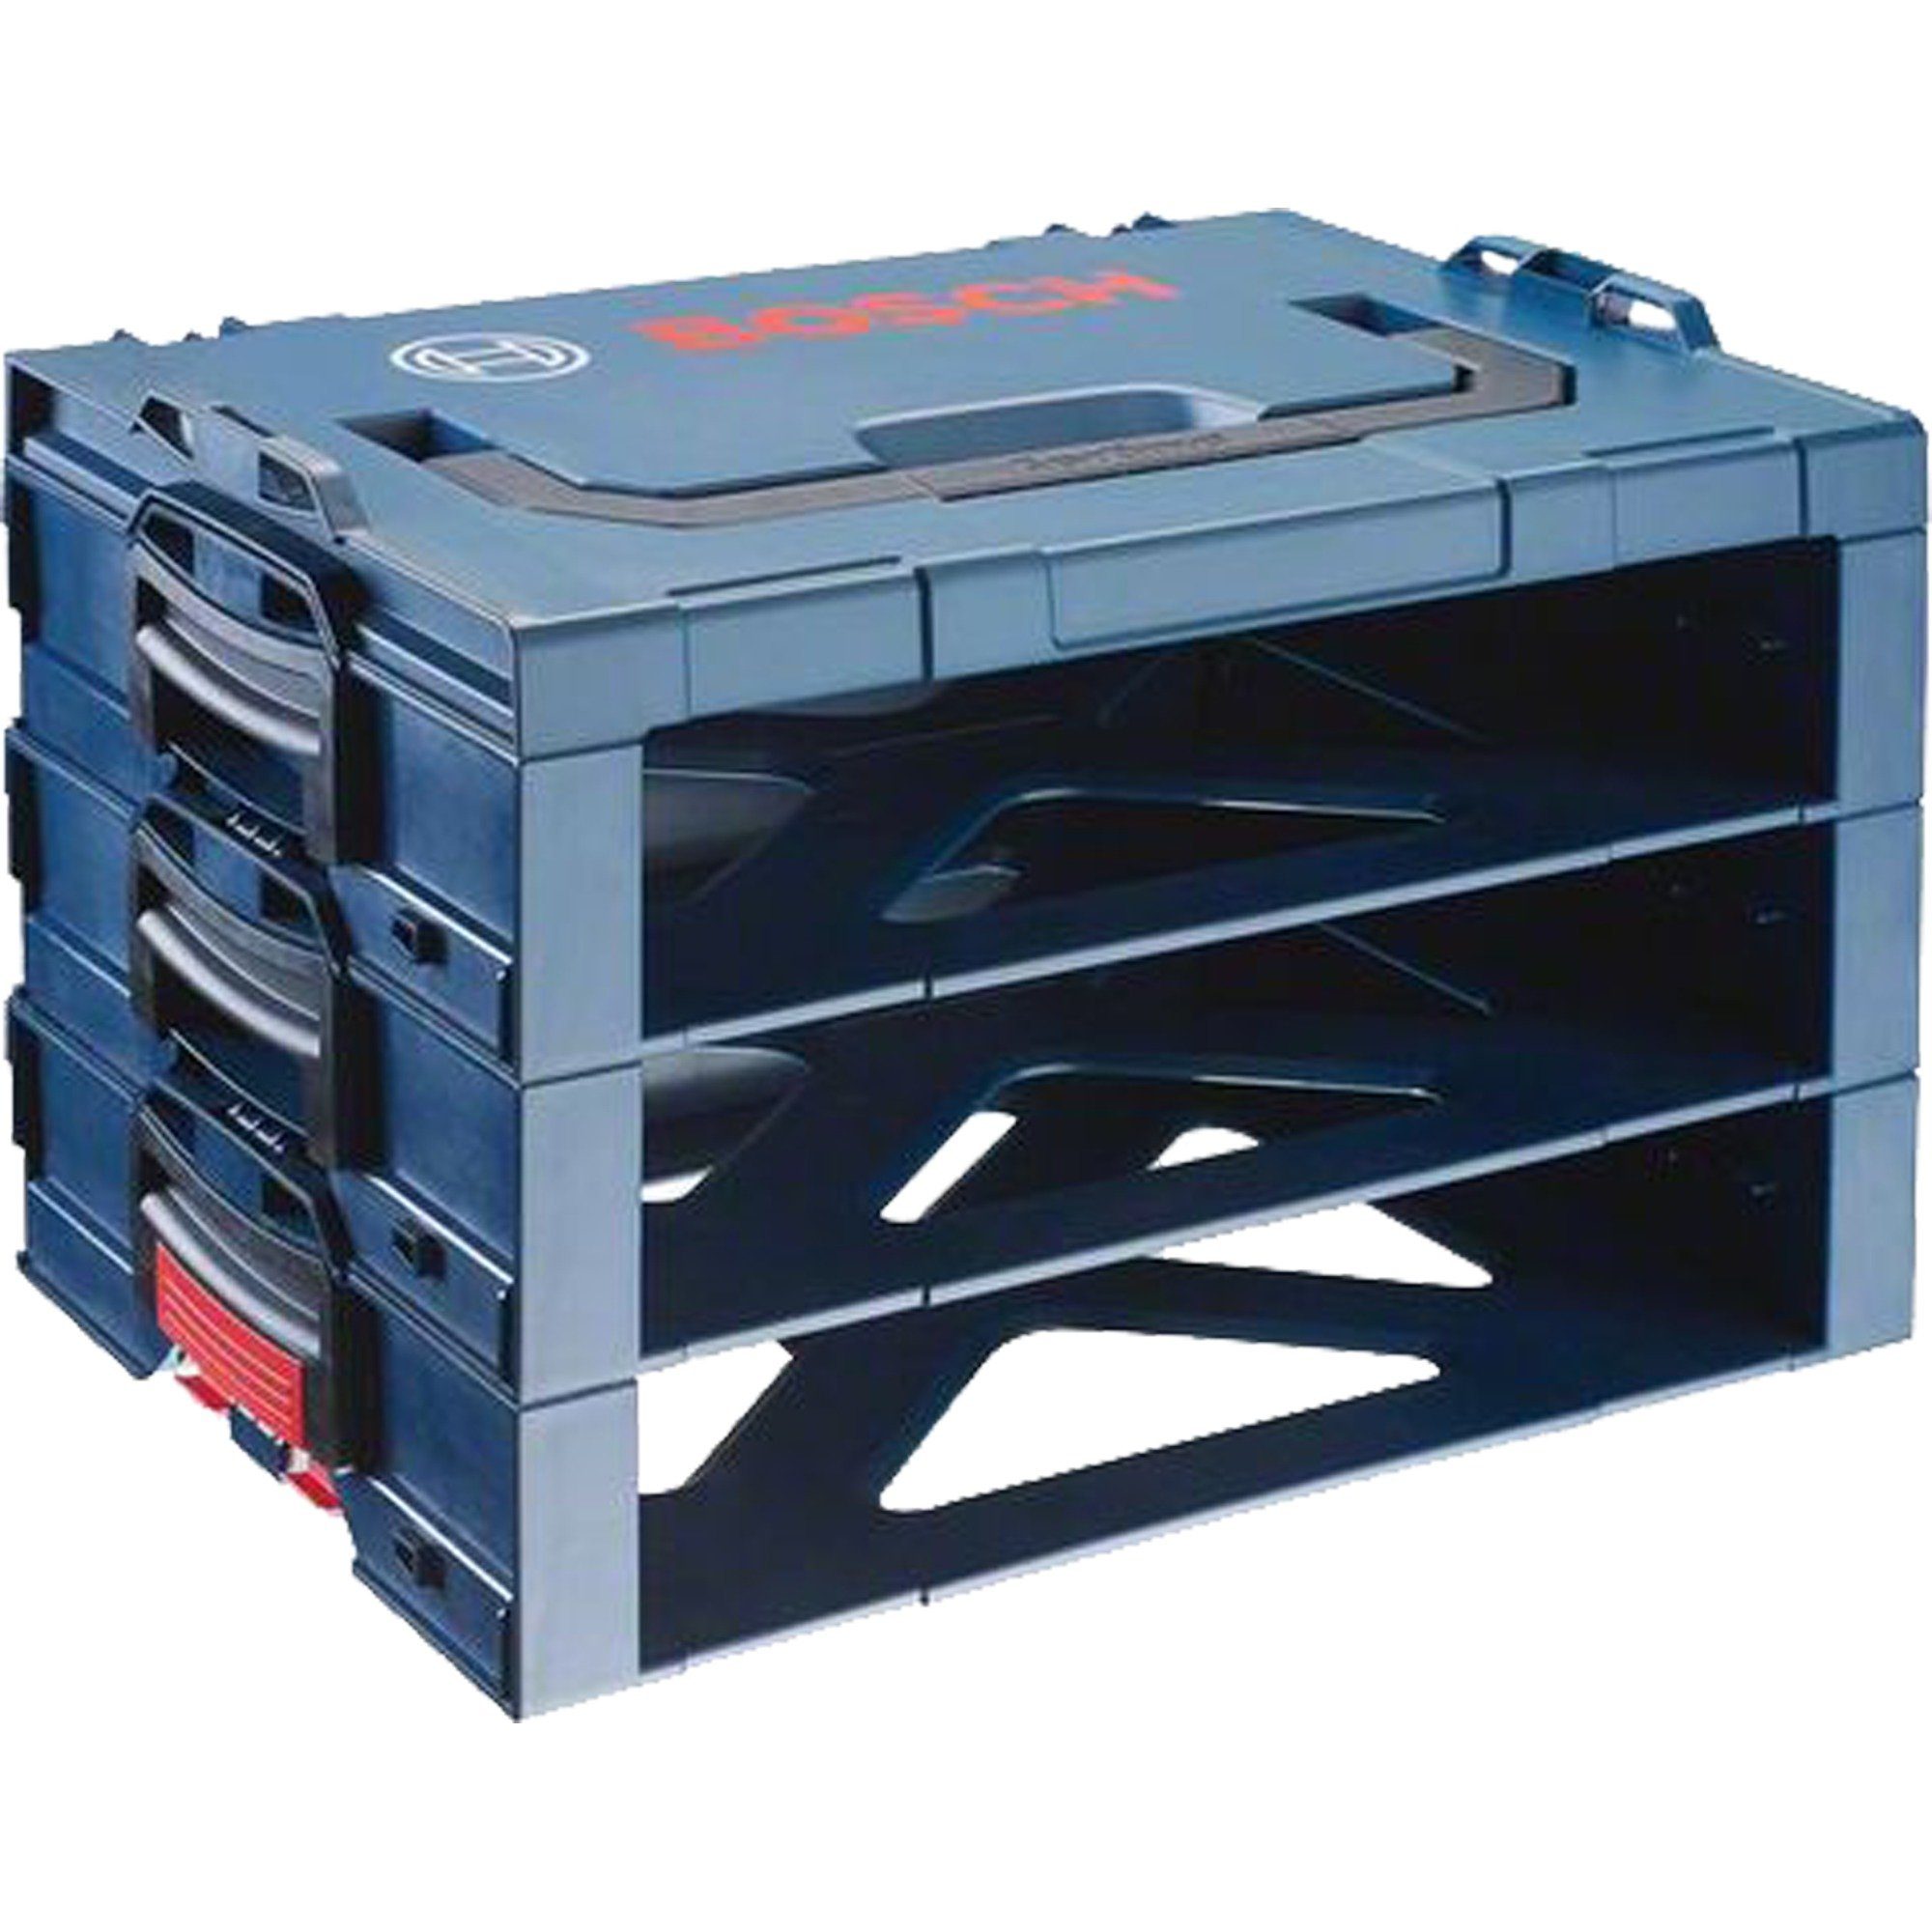 BOSCH Werkzeugkoffer i-BOXX shelf 3 pcs. BxHxT 442 x 356 x 342 mm